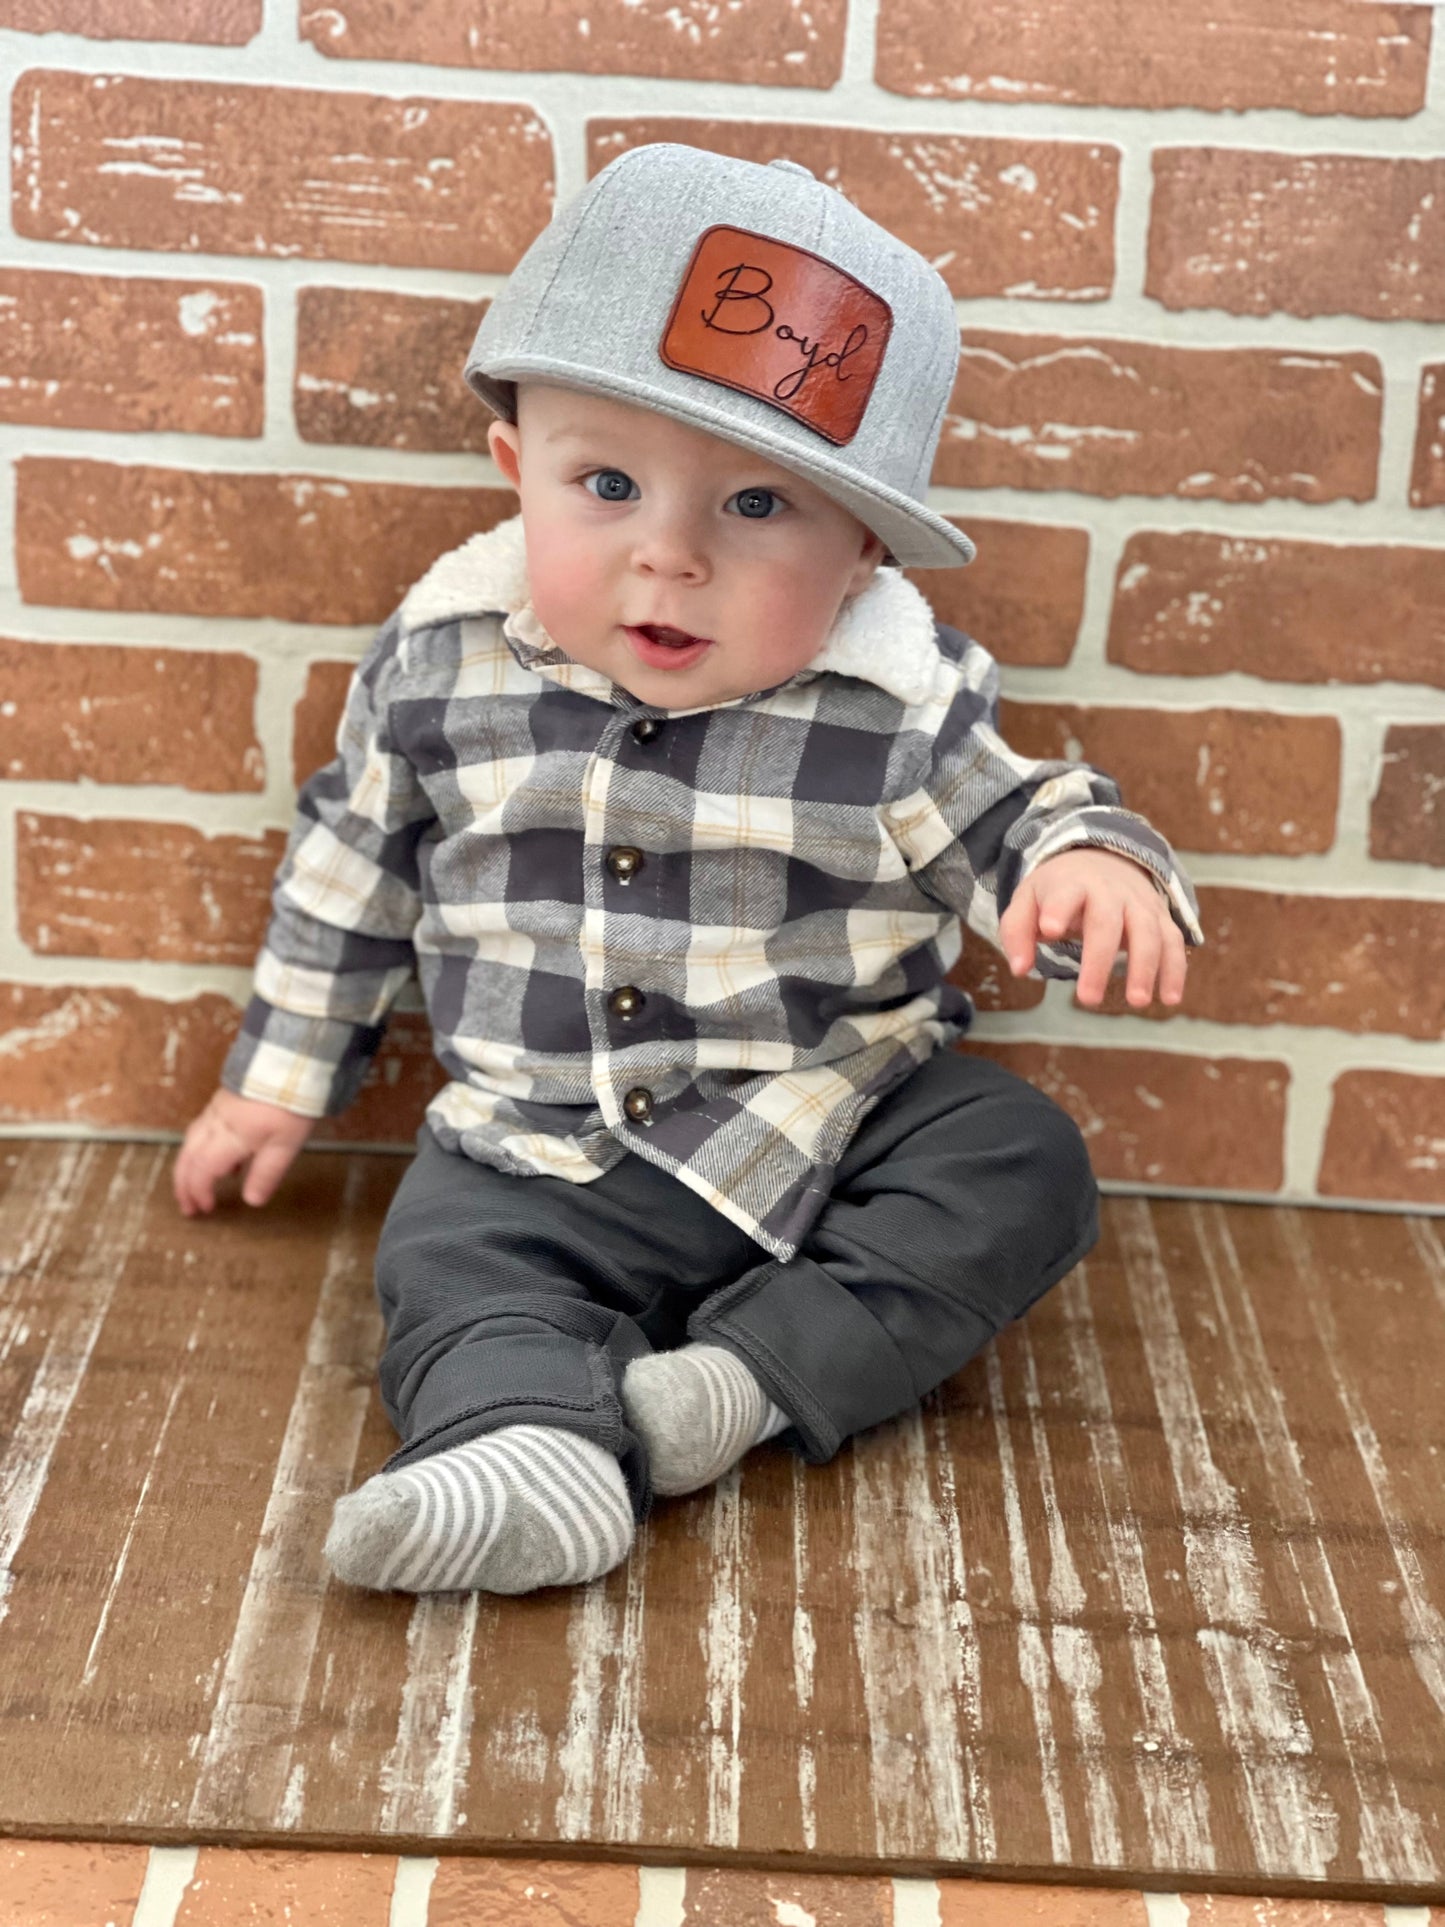 Baby/Youth Name Hat (Gray Denim).